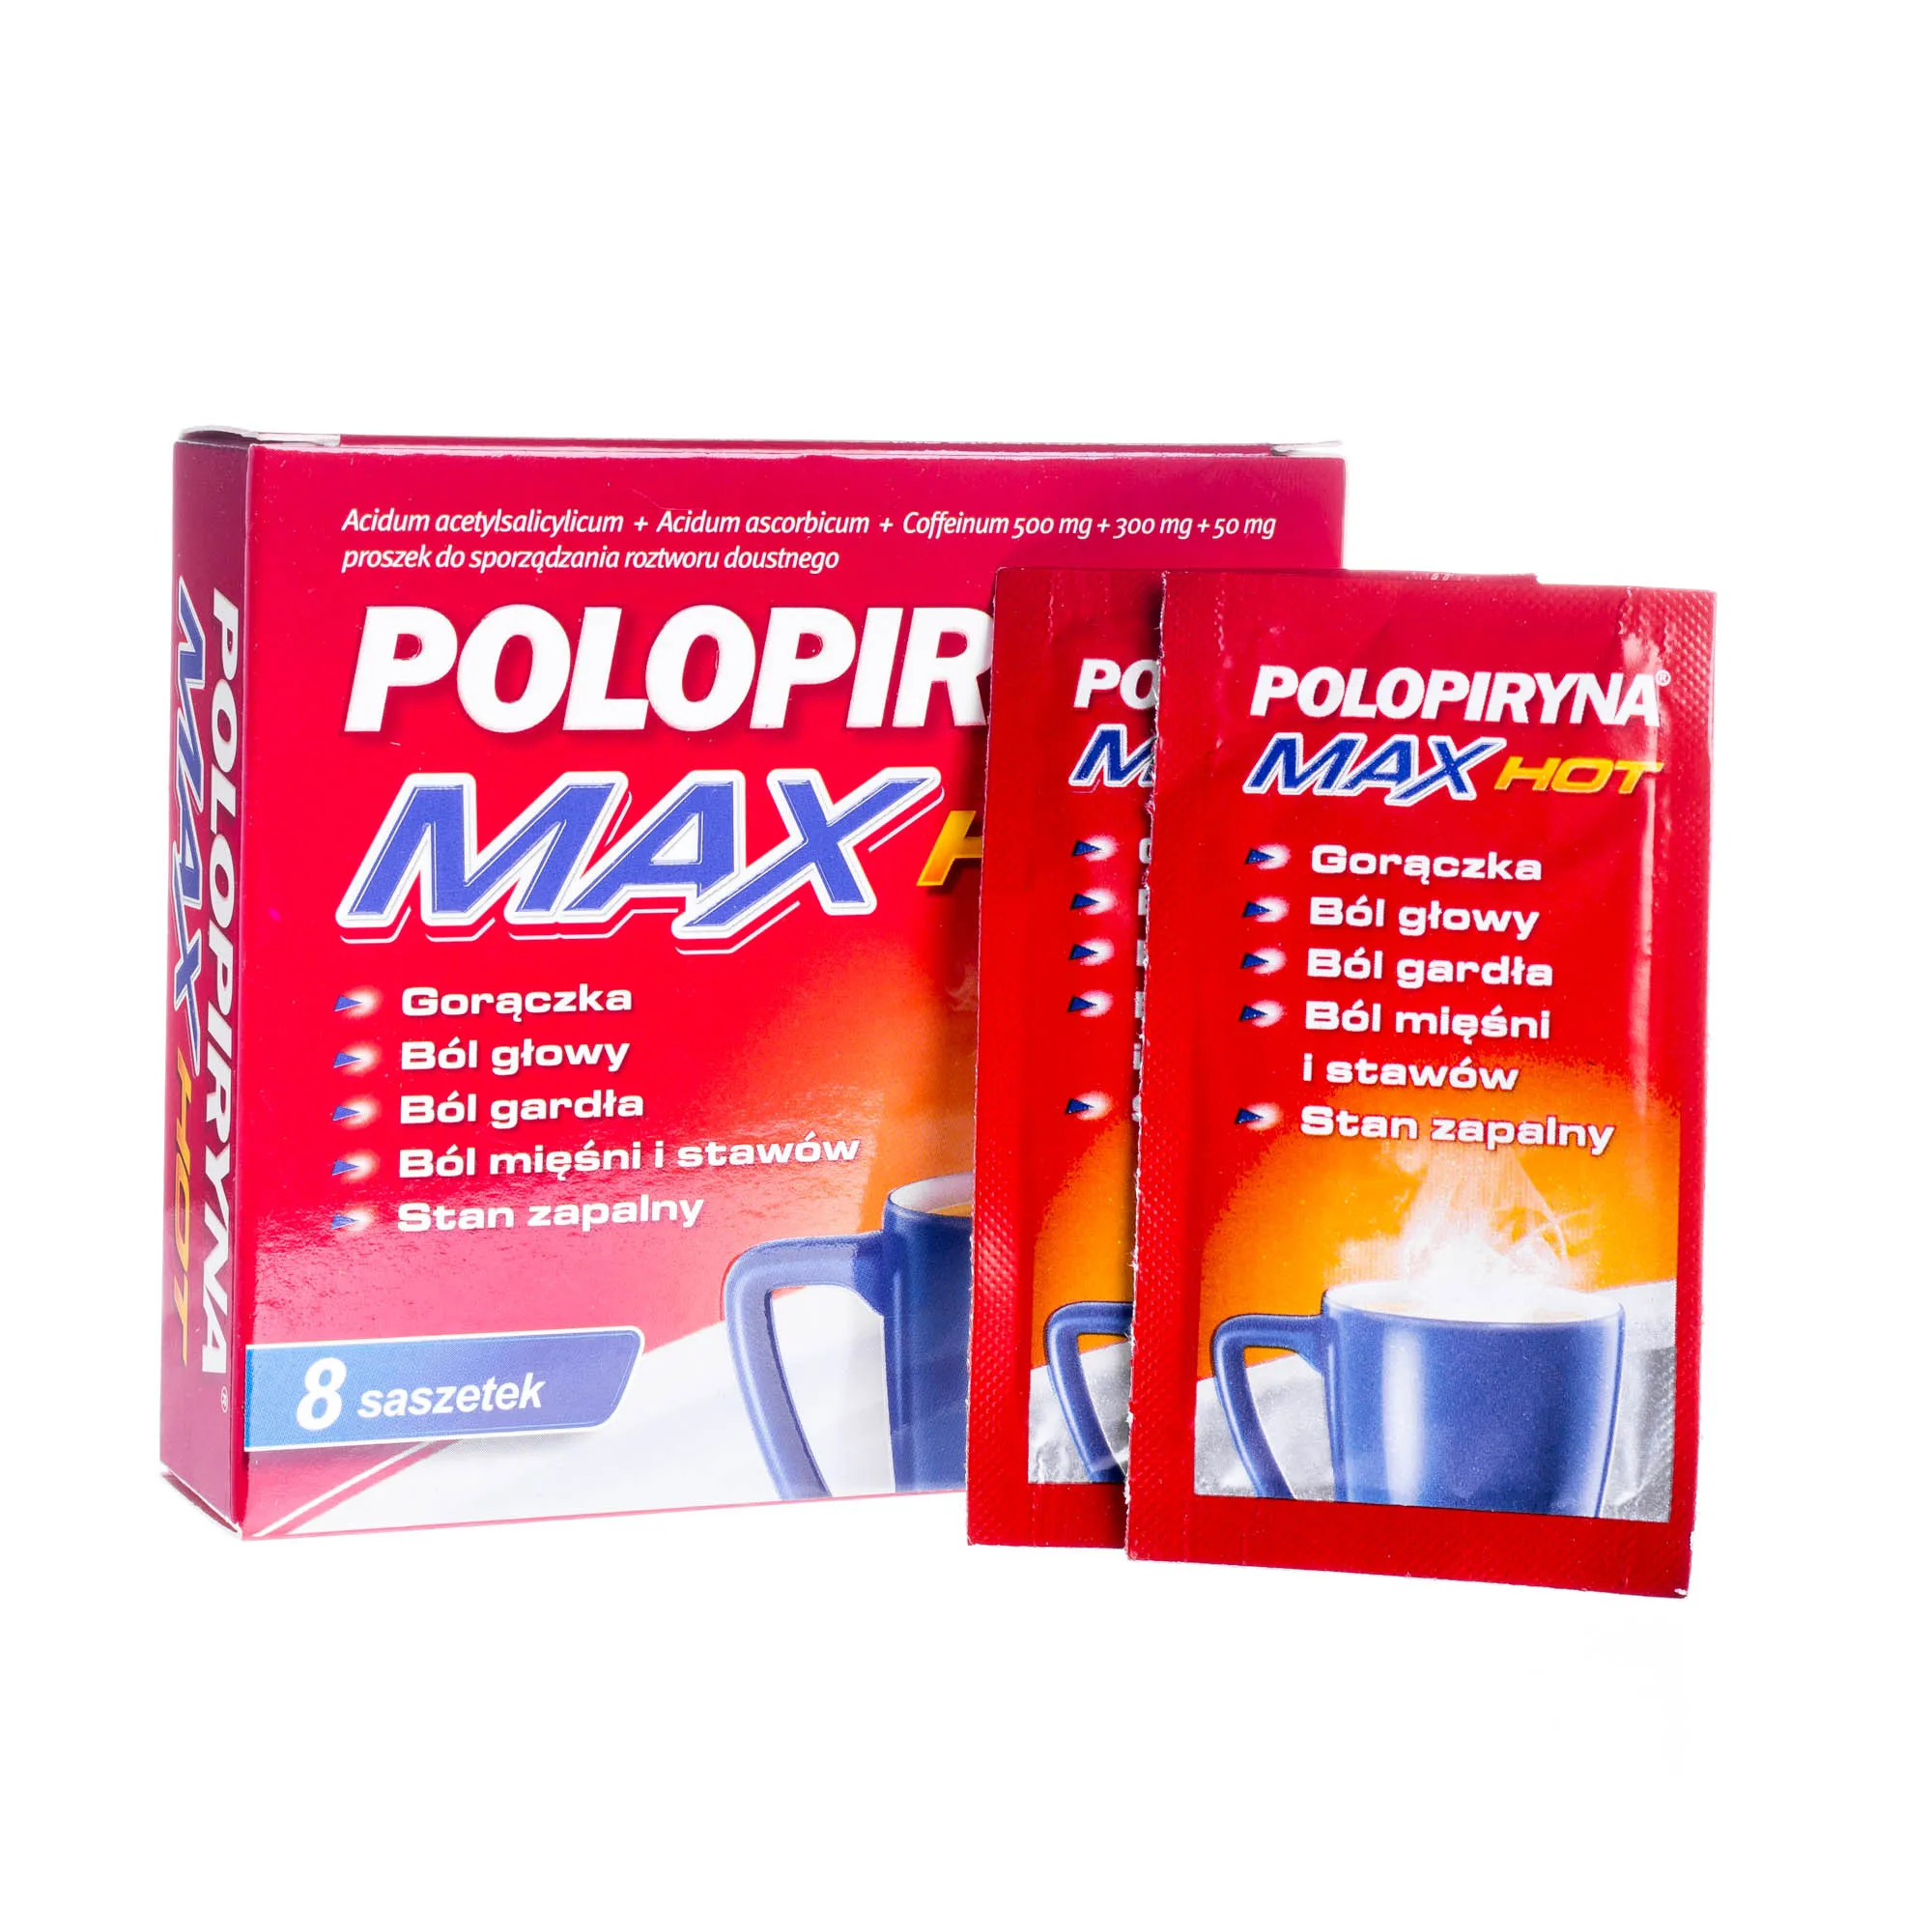 Polopiryna MAX Hot, 500 mg + 300 mg + 50 mg, 8 saszetek